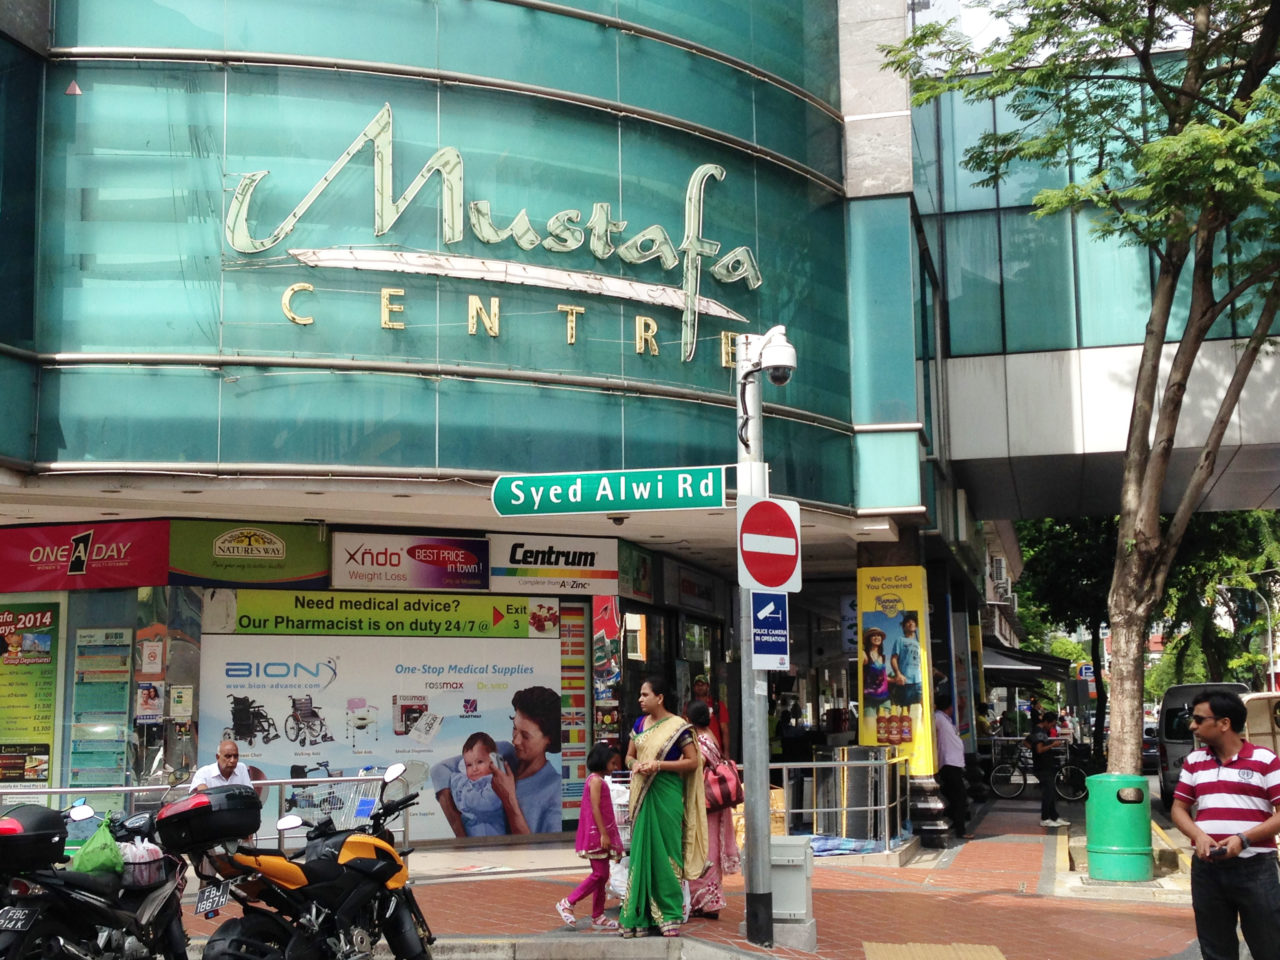 Mustafa-Centre-singapore-1280x960.jpg